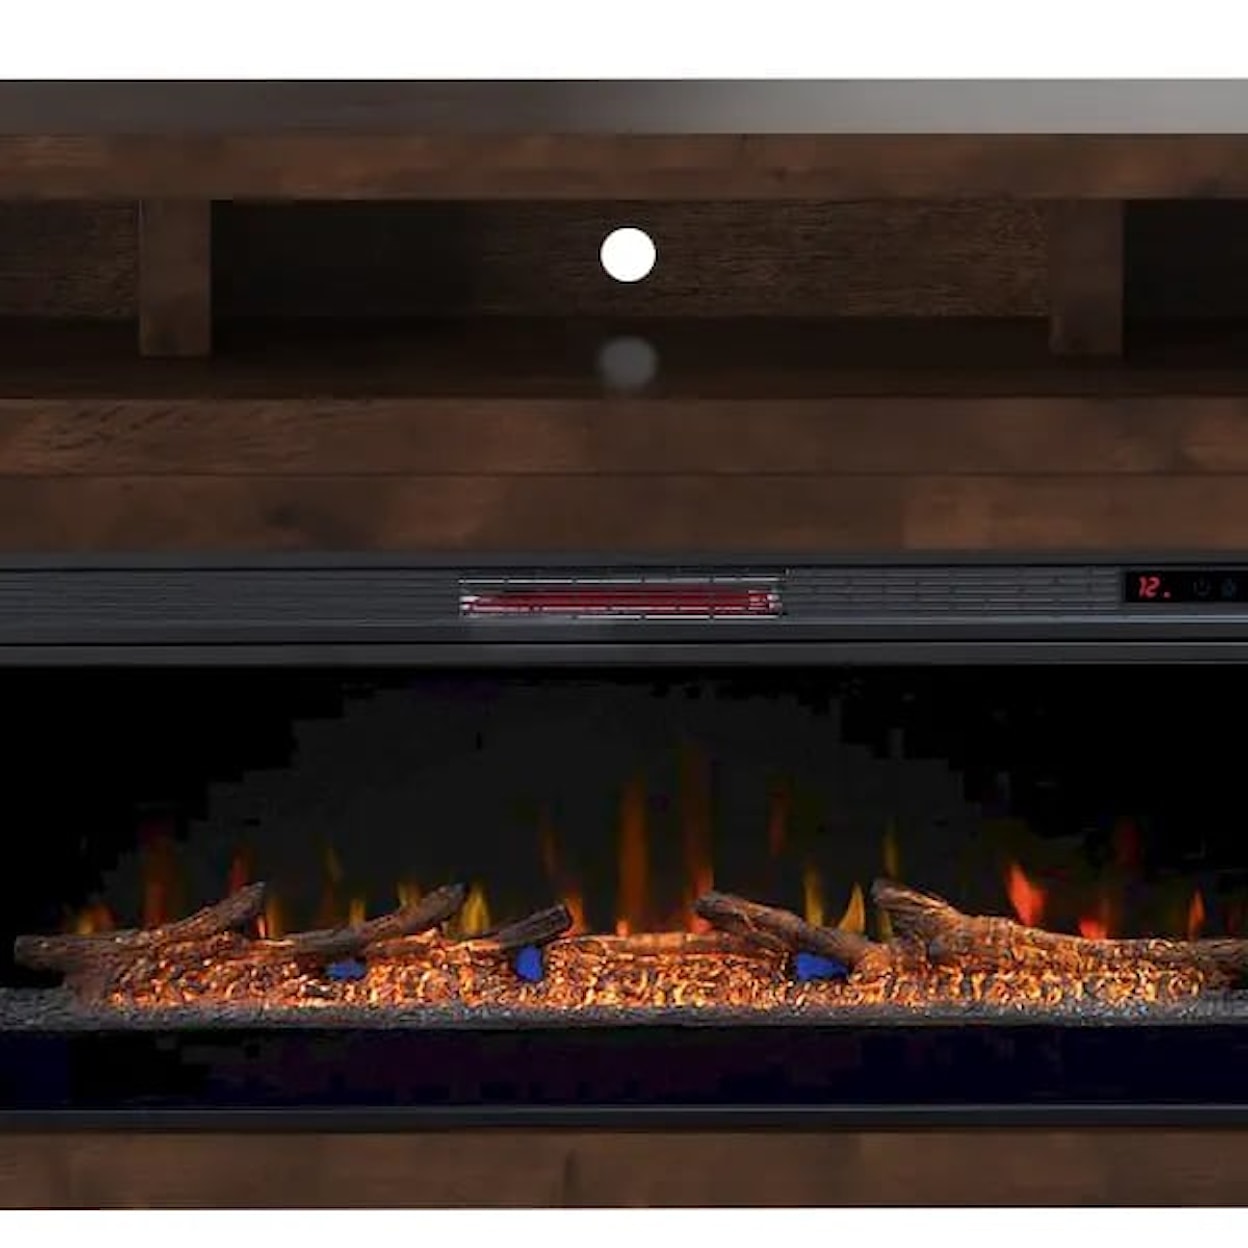 Legends Furniture Sausalito 78" Fireplace Console